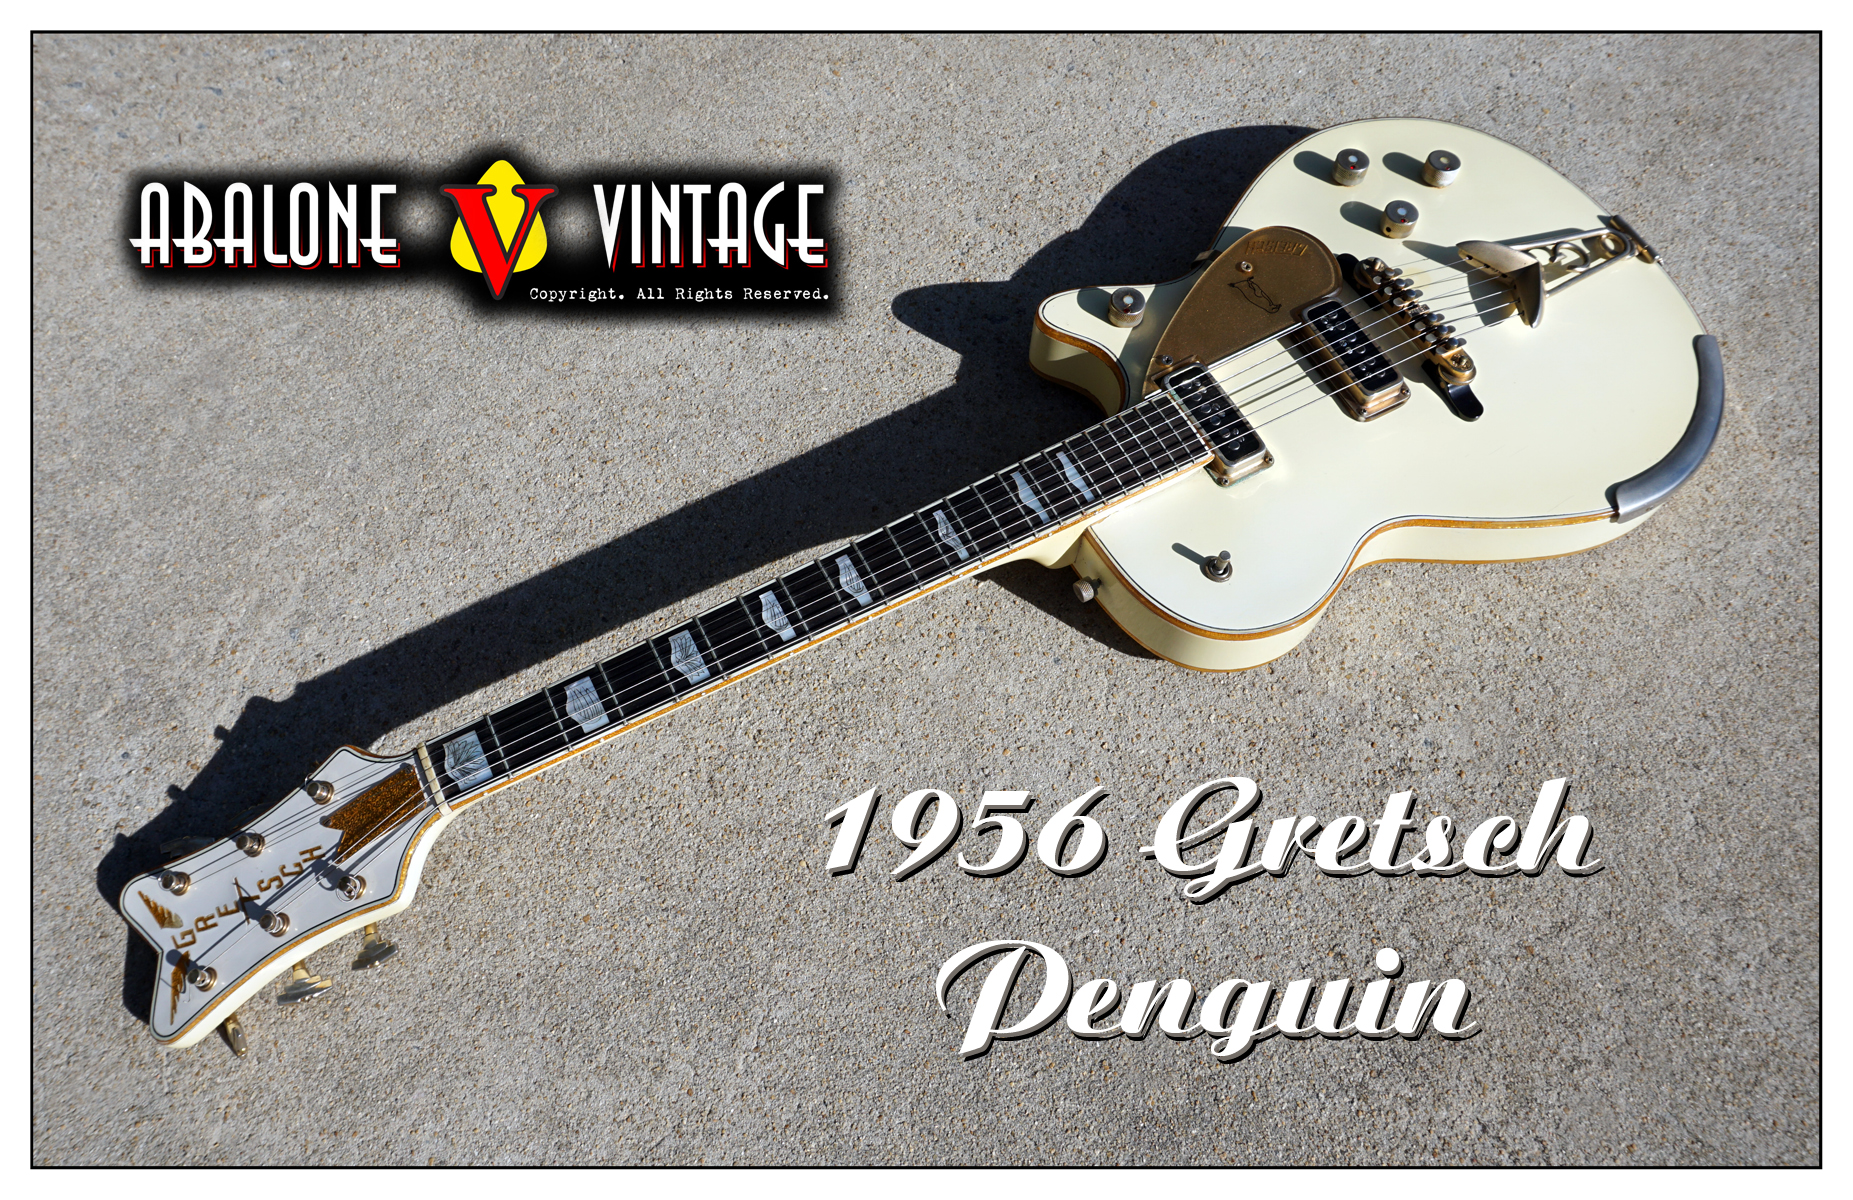 1956 Gretsch White Penguin guitar Original vintage